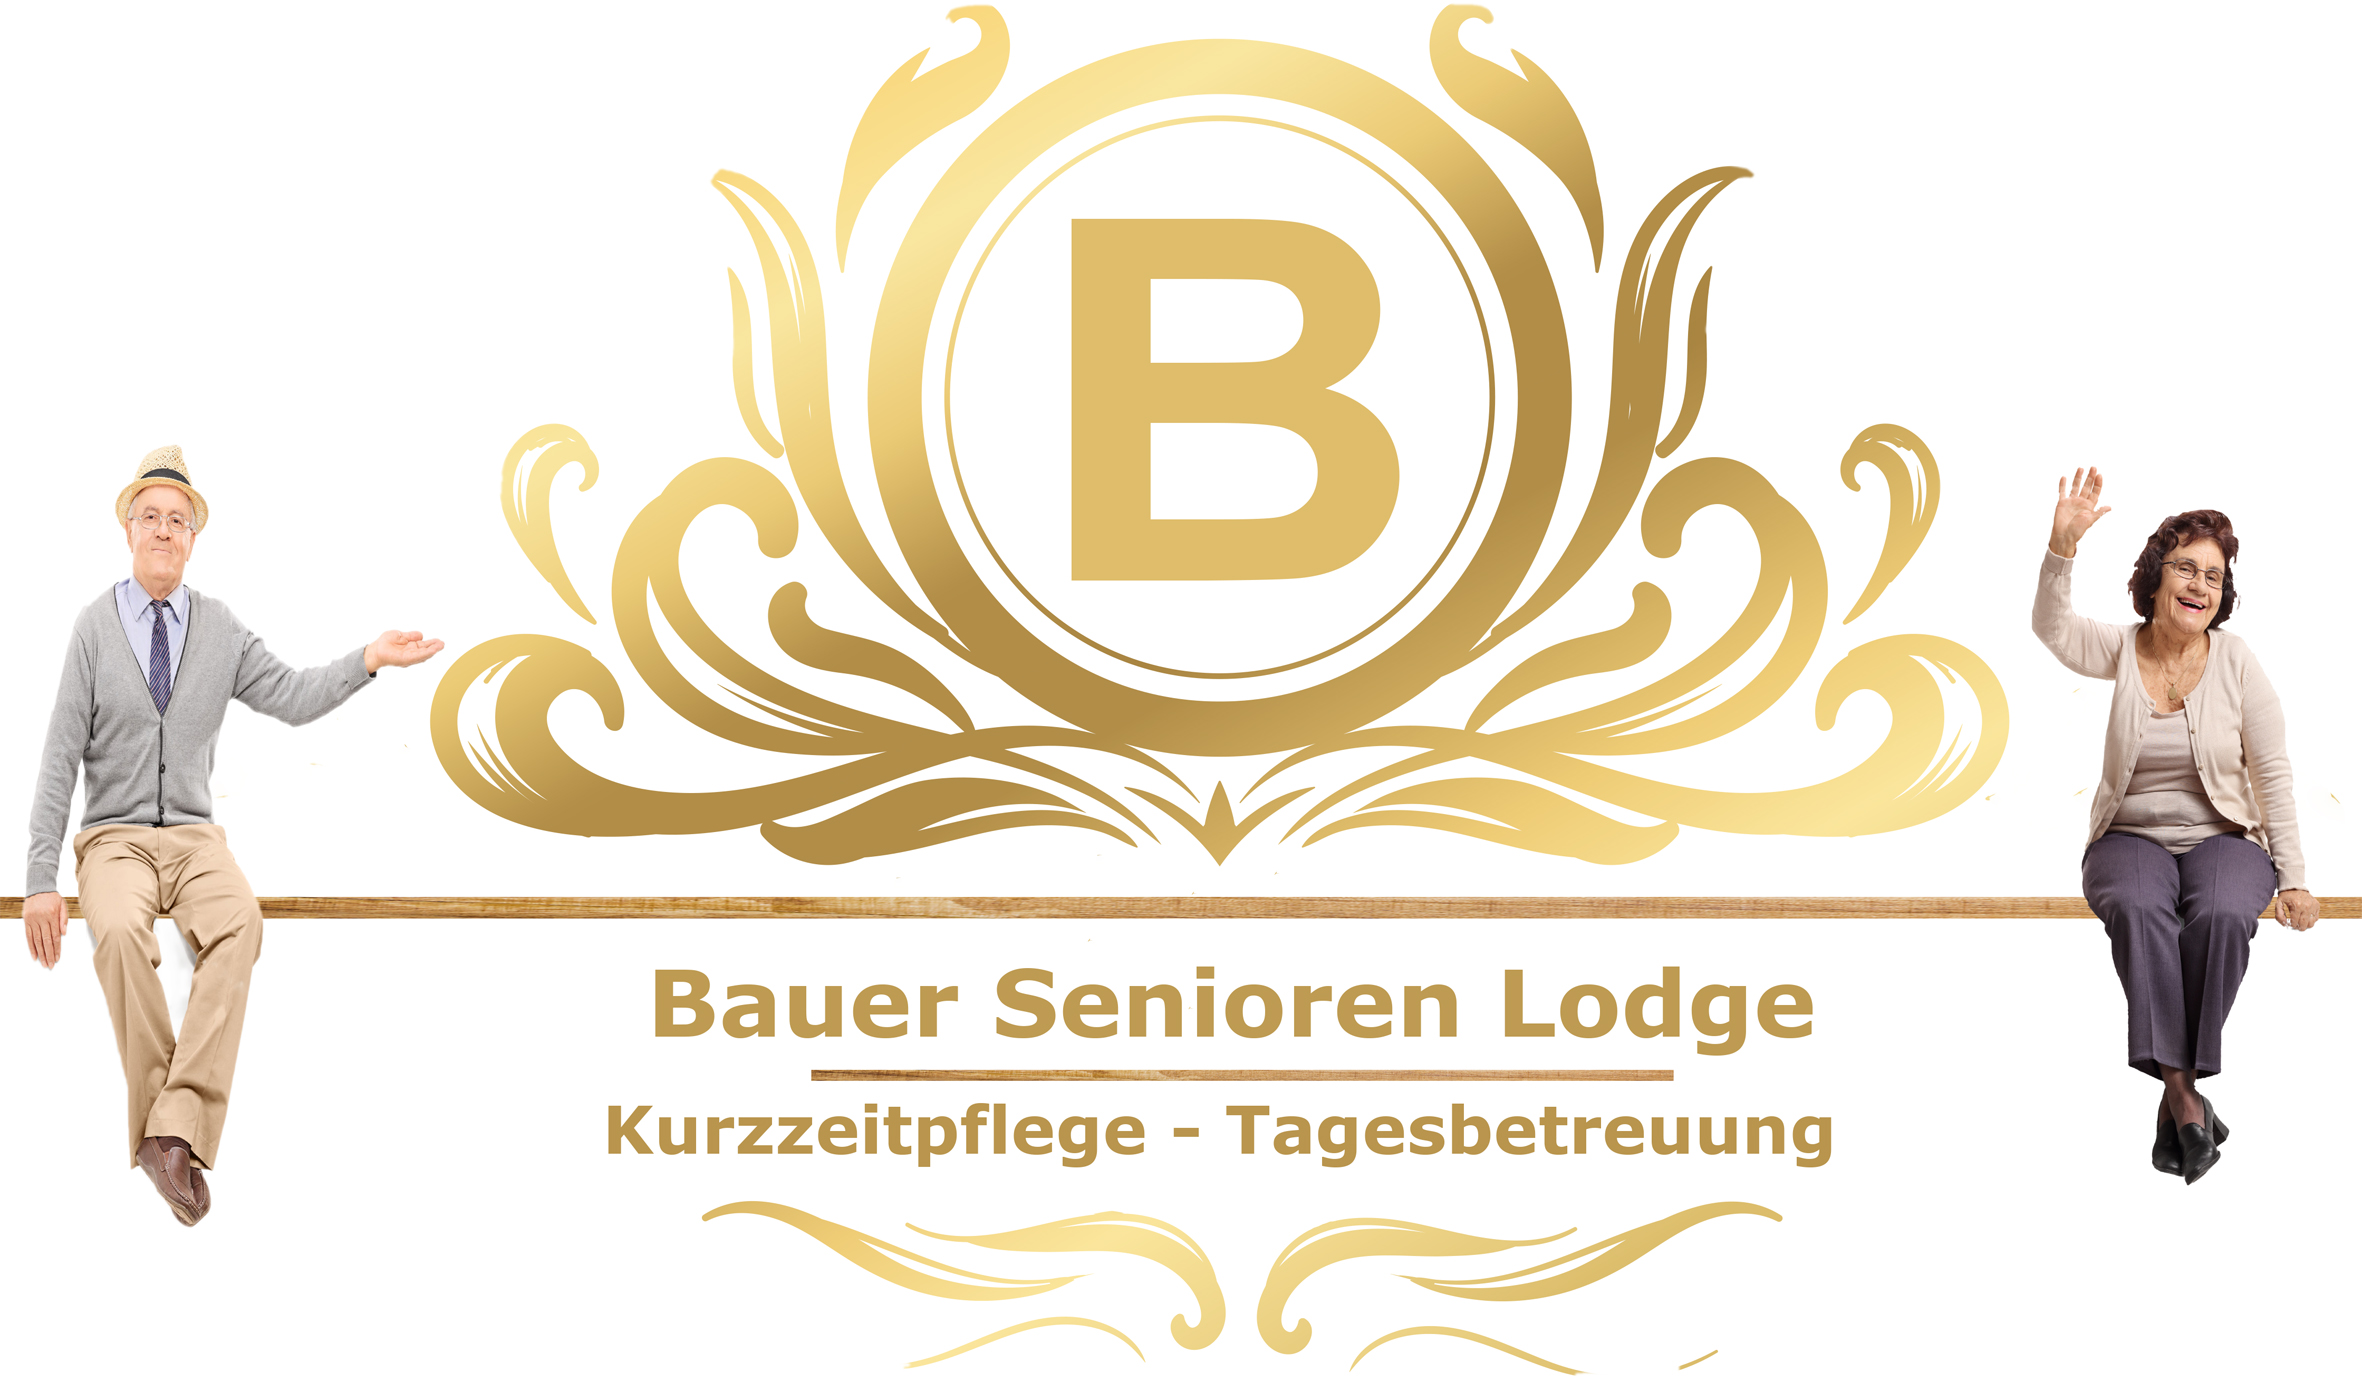 Bauer Senioren Lodge